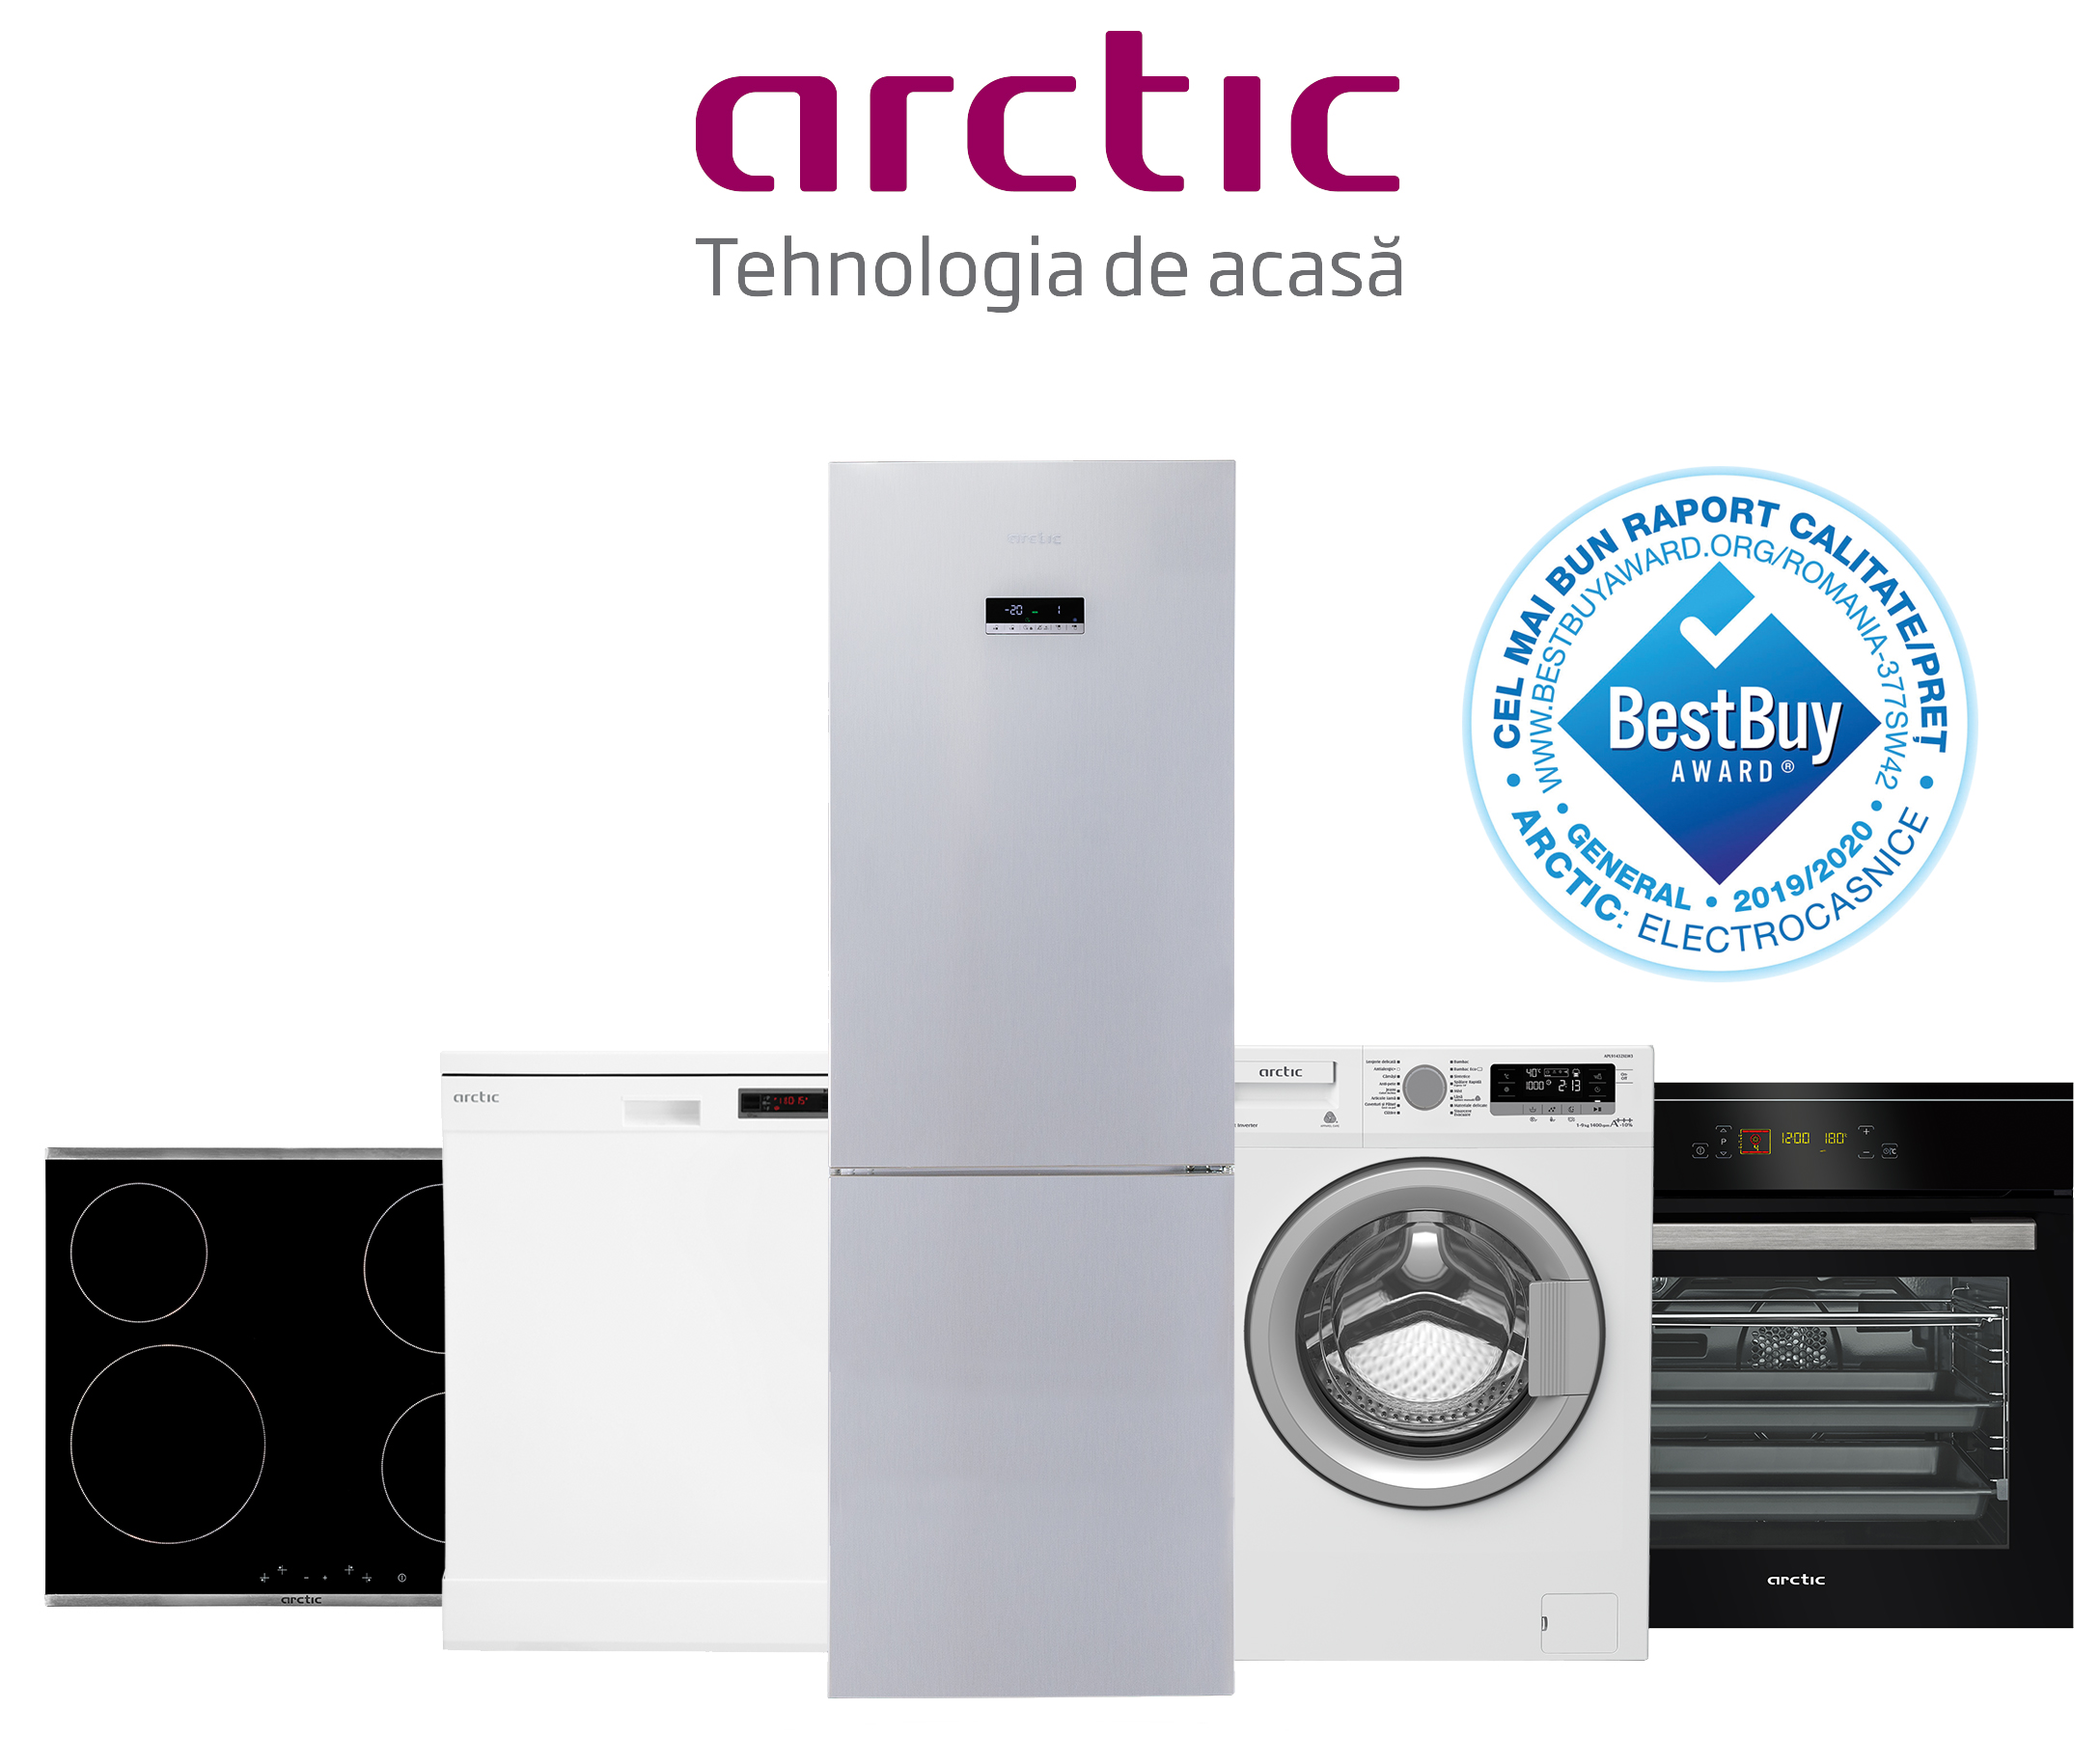 Arctic Best Buy Award - International Certification Association (2019)